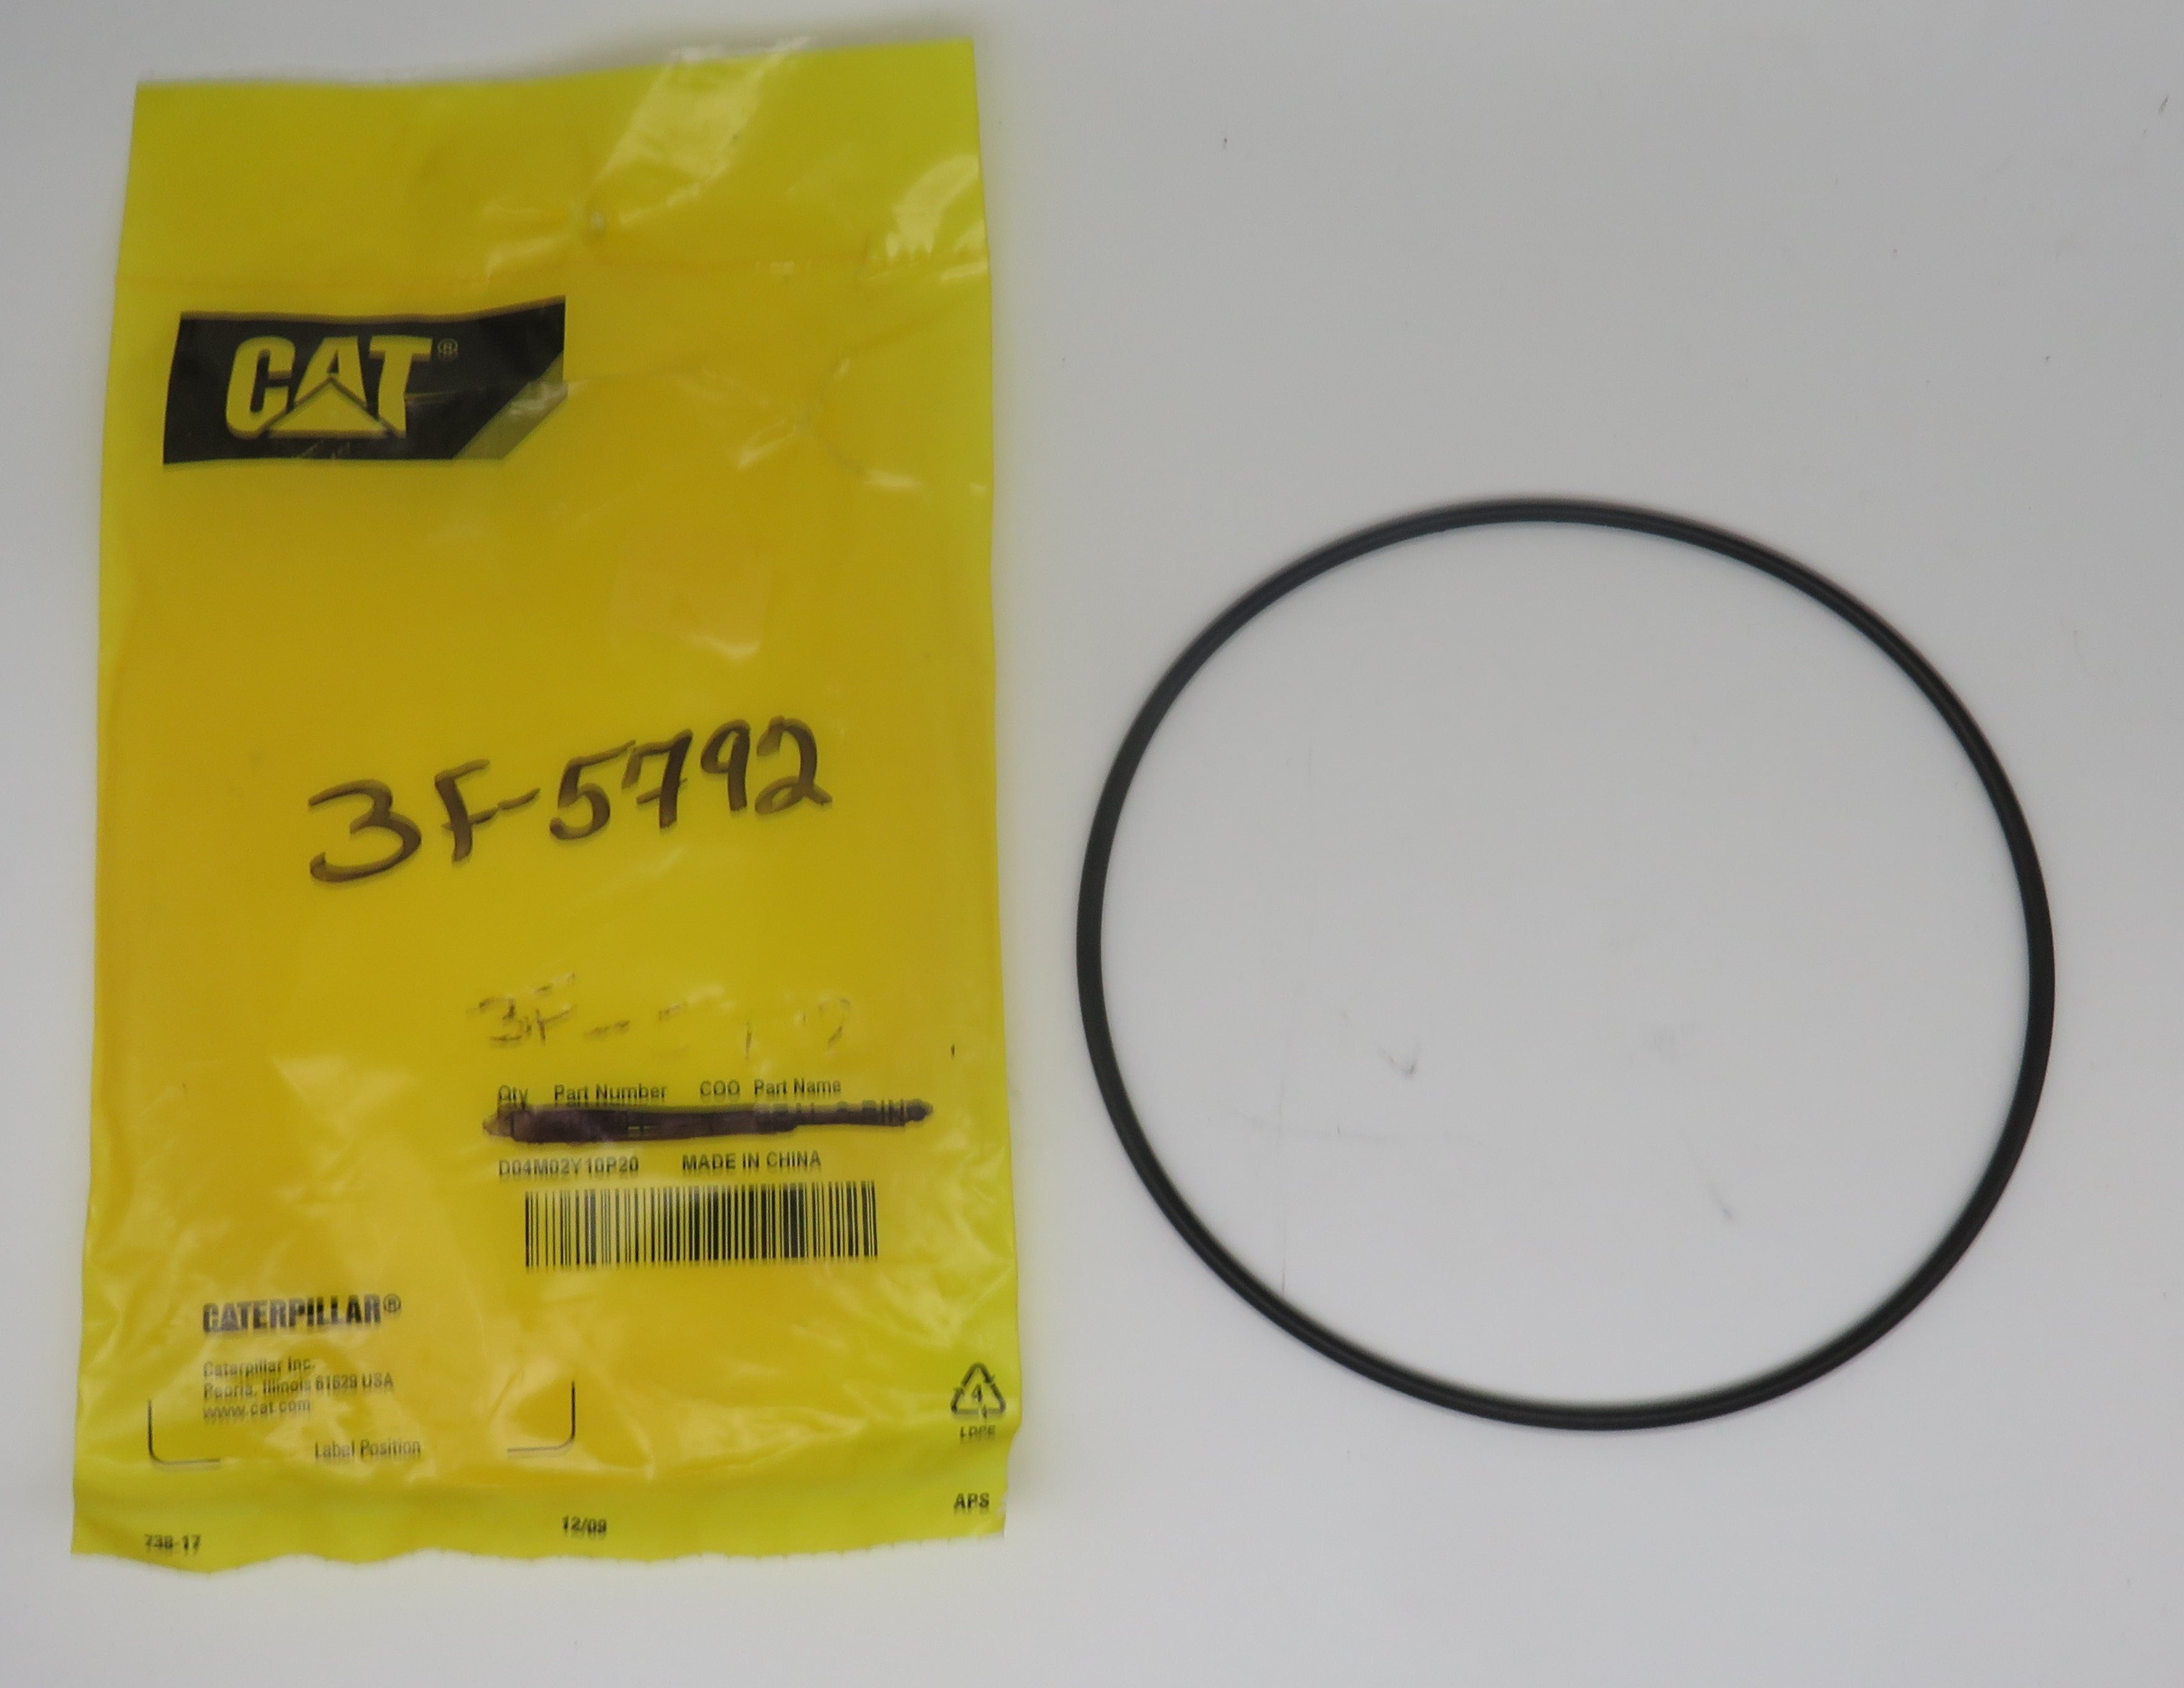 3F-5792 Caterpillar CAT Seal